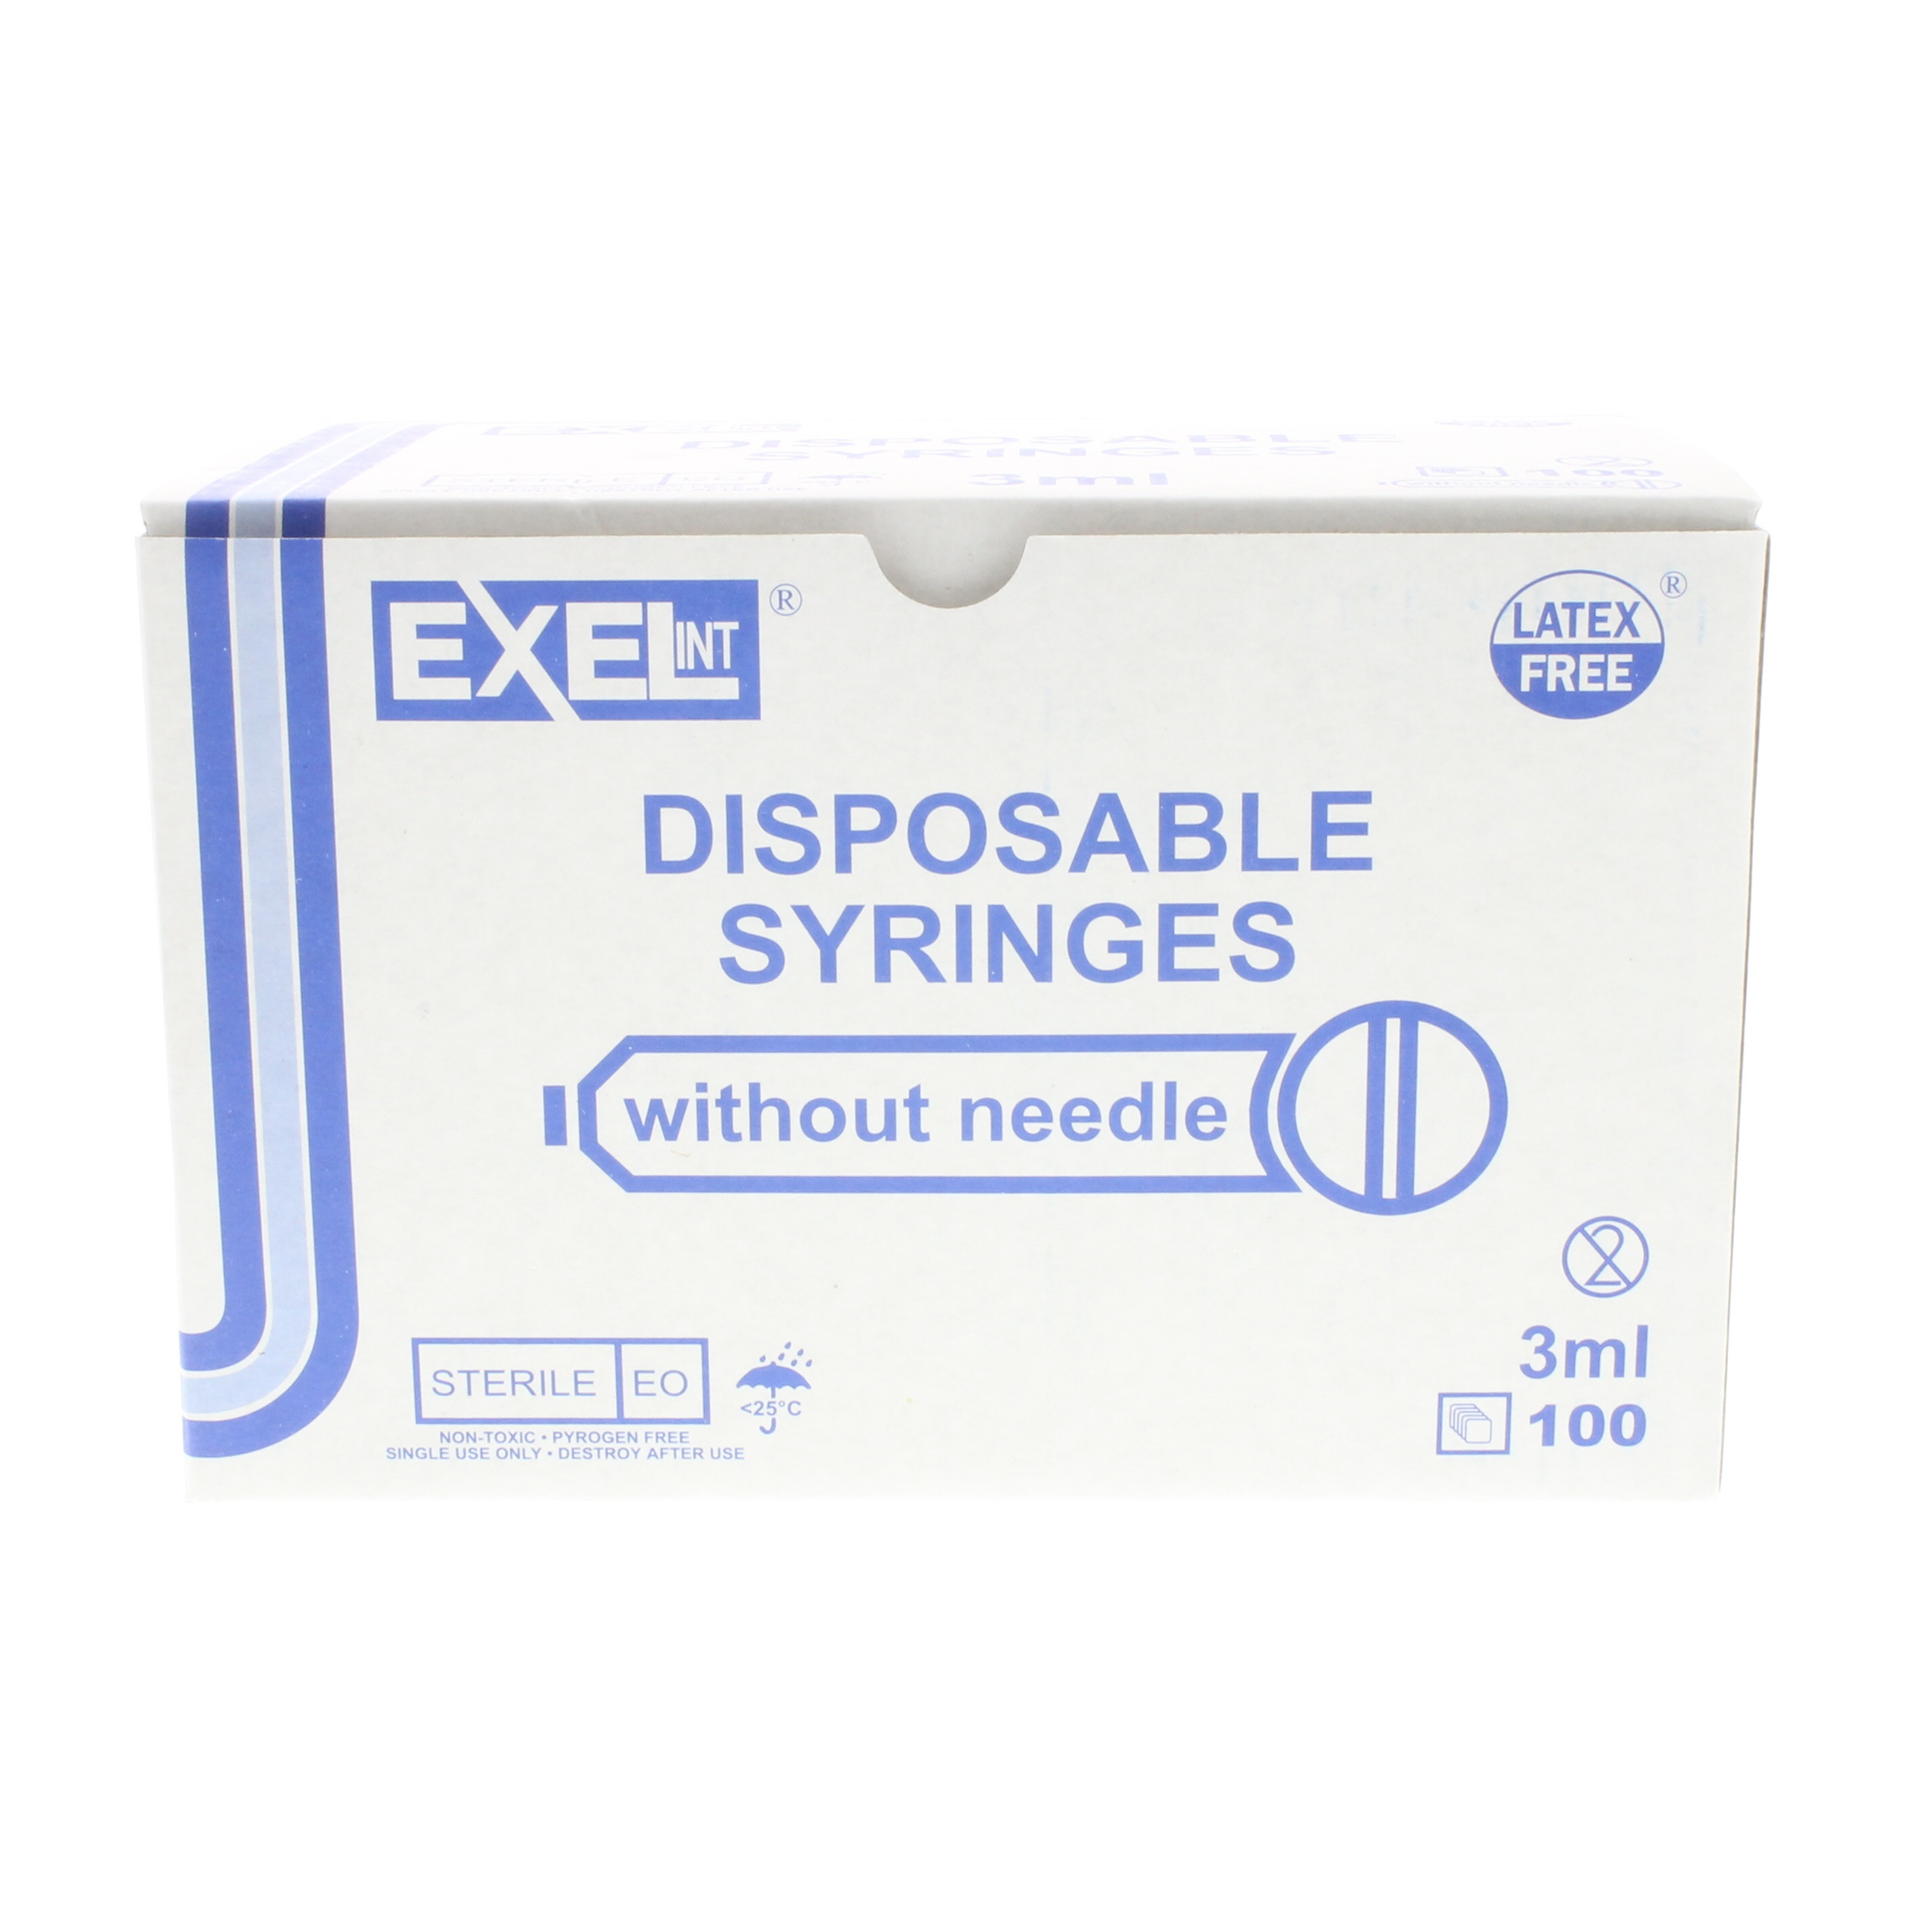 Exel 25g x 1 Inch Needle - Box/100: Clint Pharmaceuticals